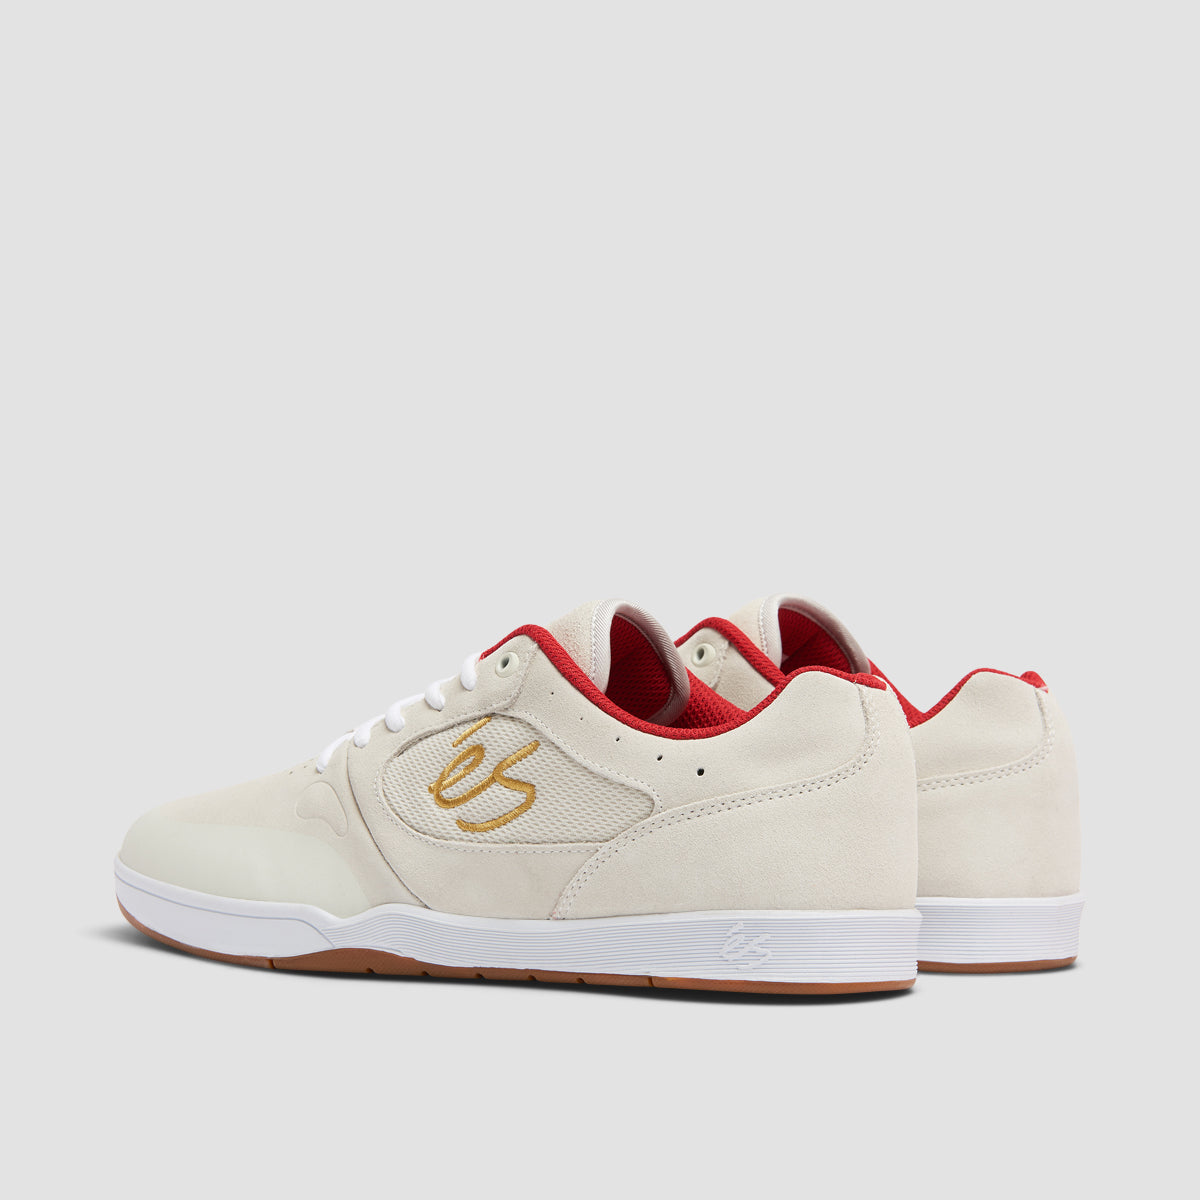 eS Swift 1.5 Shoes - White/Red/Gum